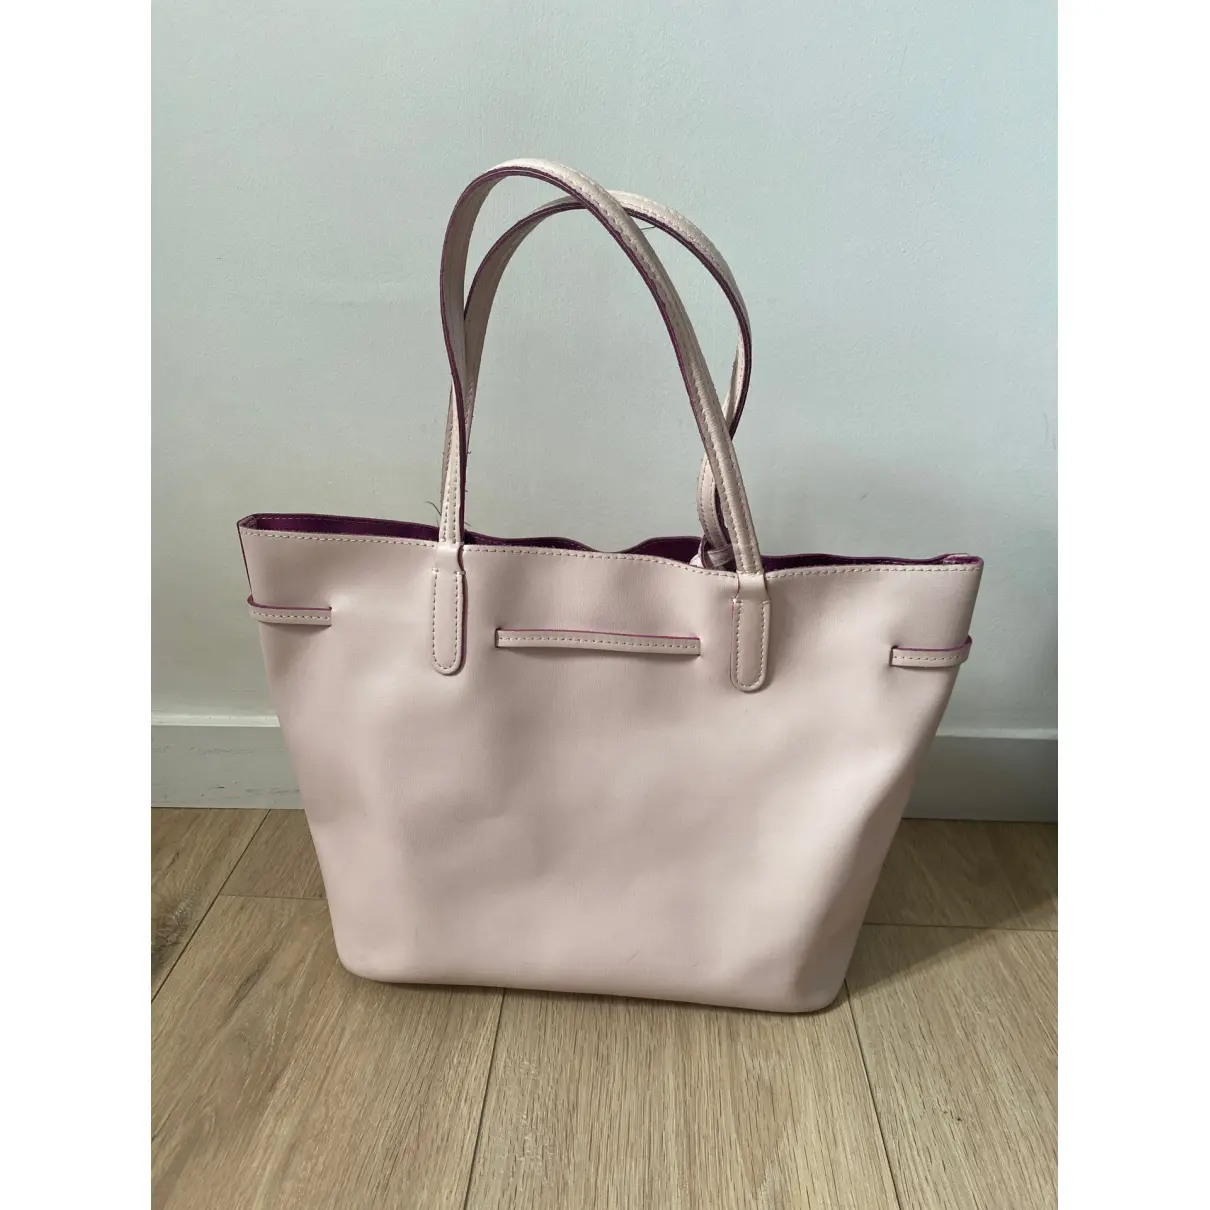 Buy Repetto Leather handbag online